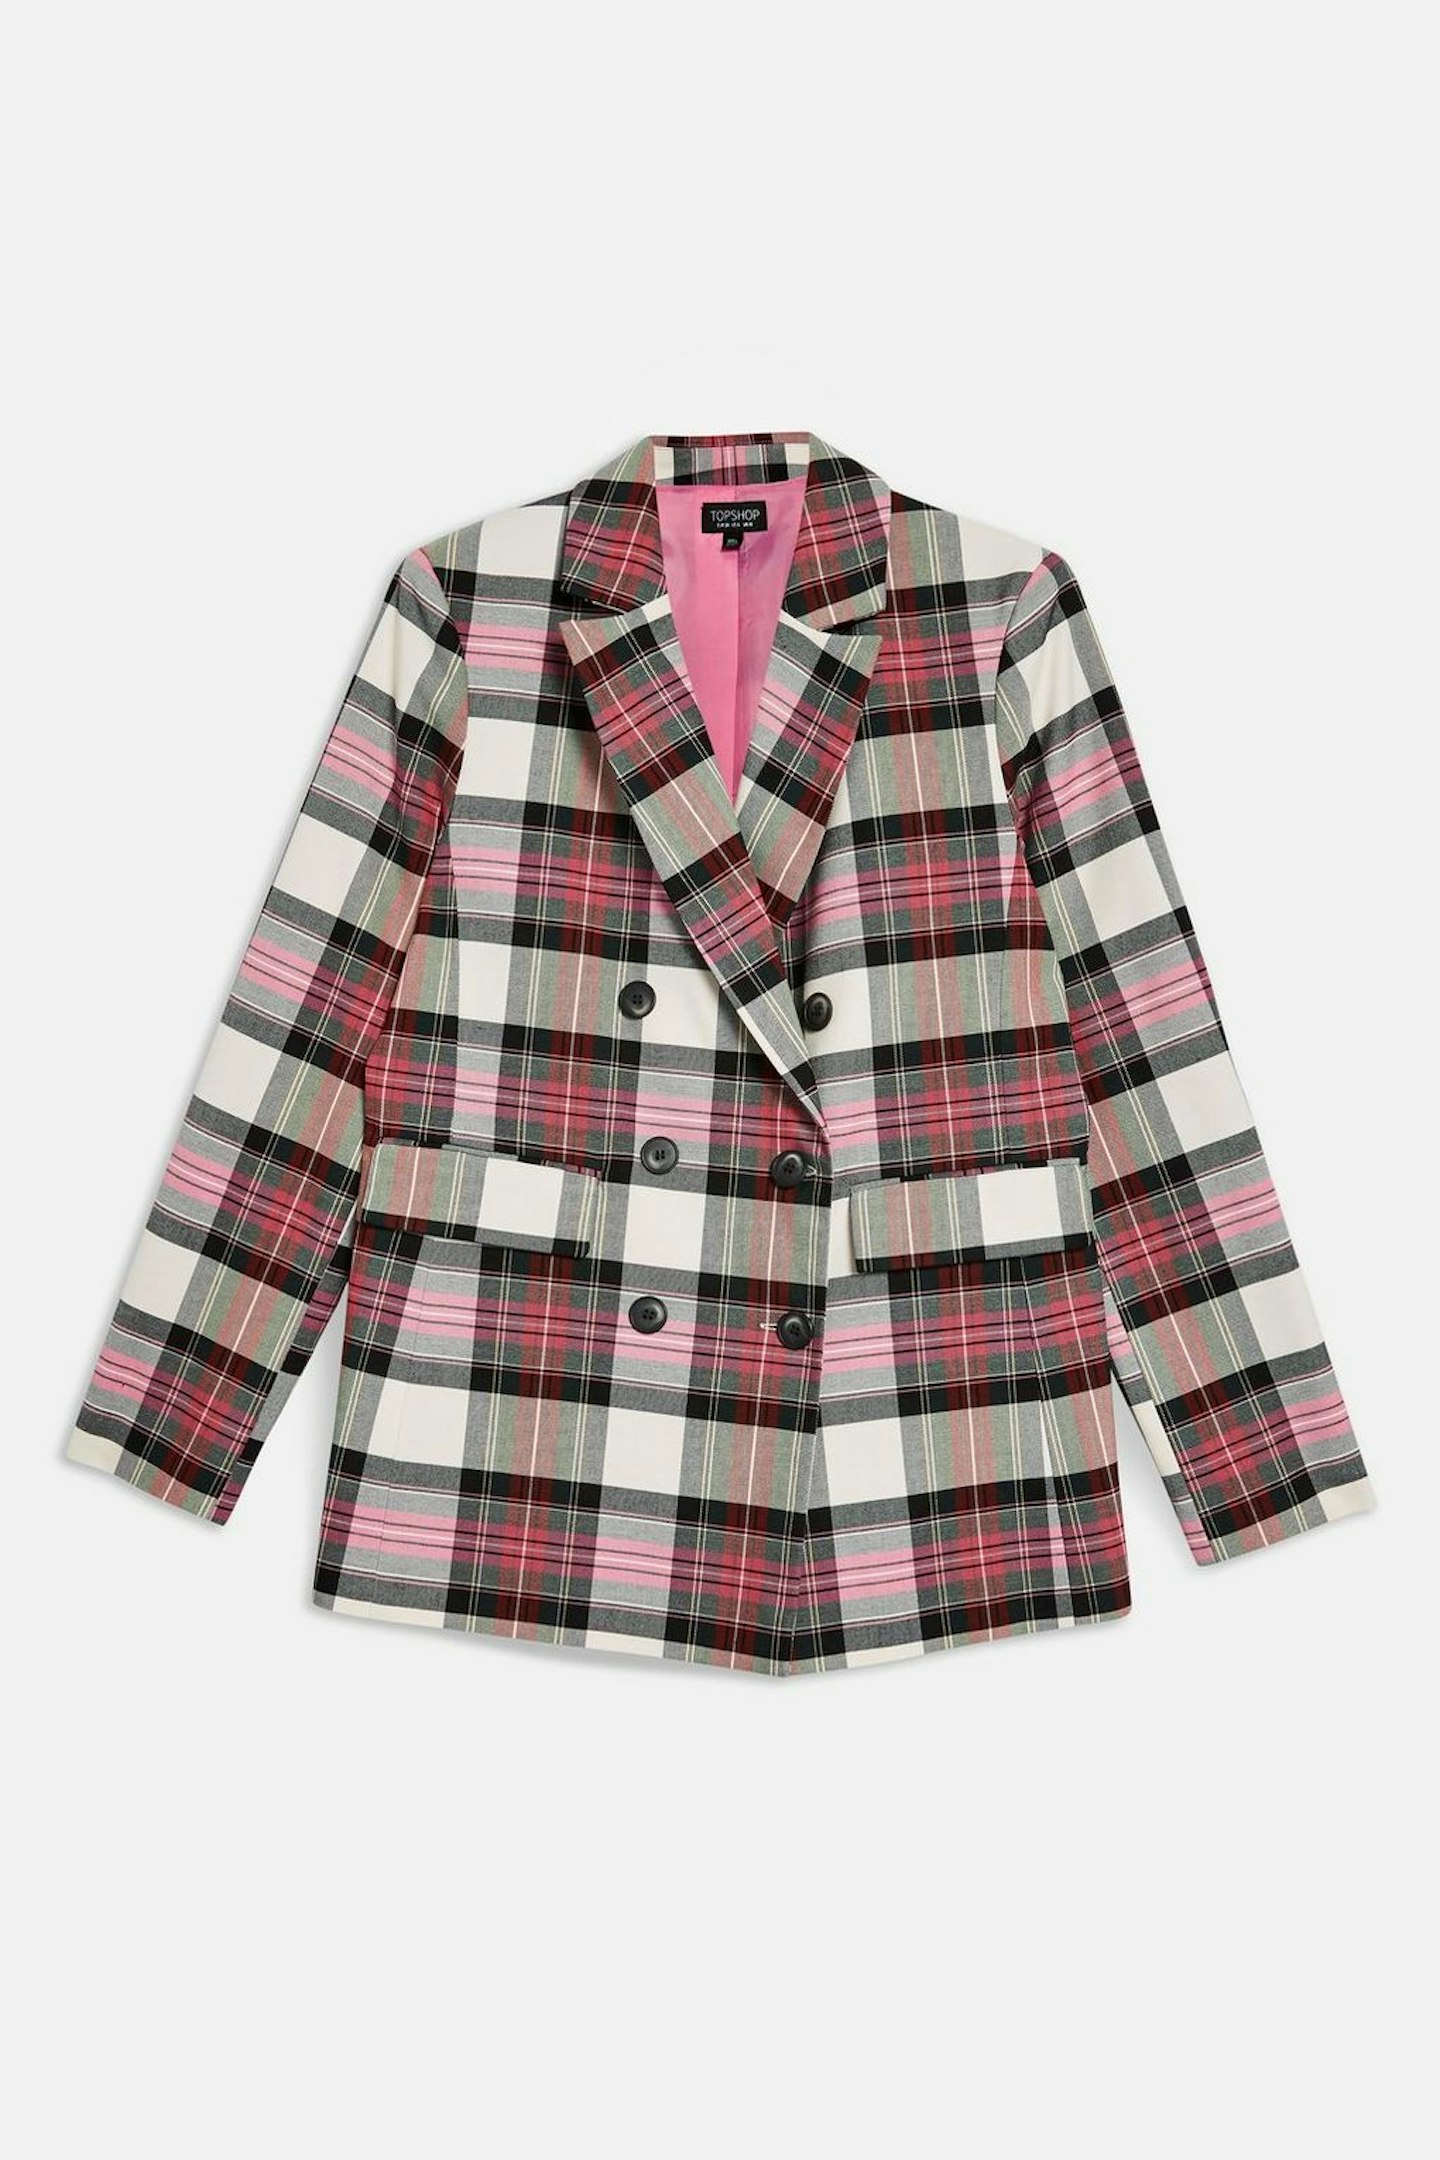 Topshop, Pink Tartan Jacket